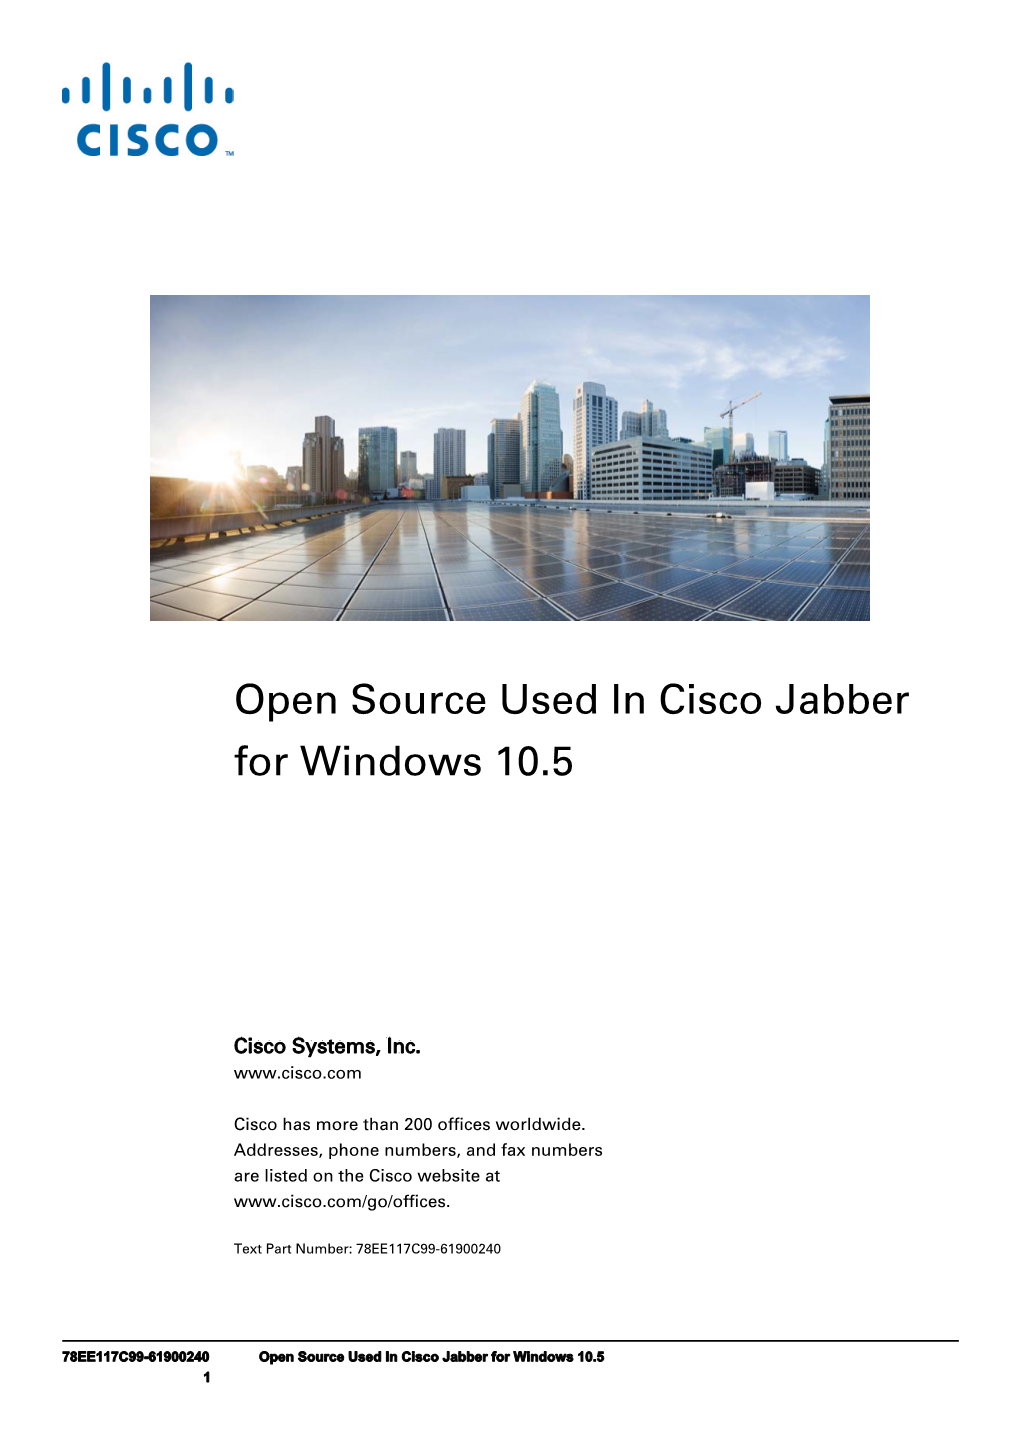 Cisco Jabber for Windows 10.5 Licensing Information